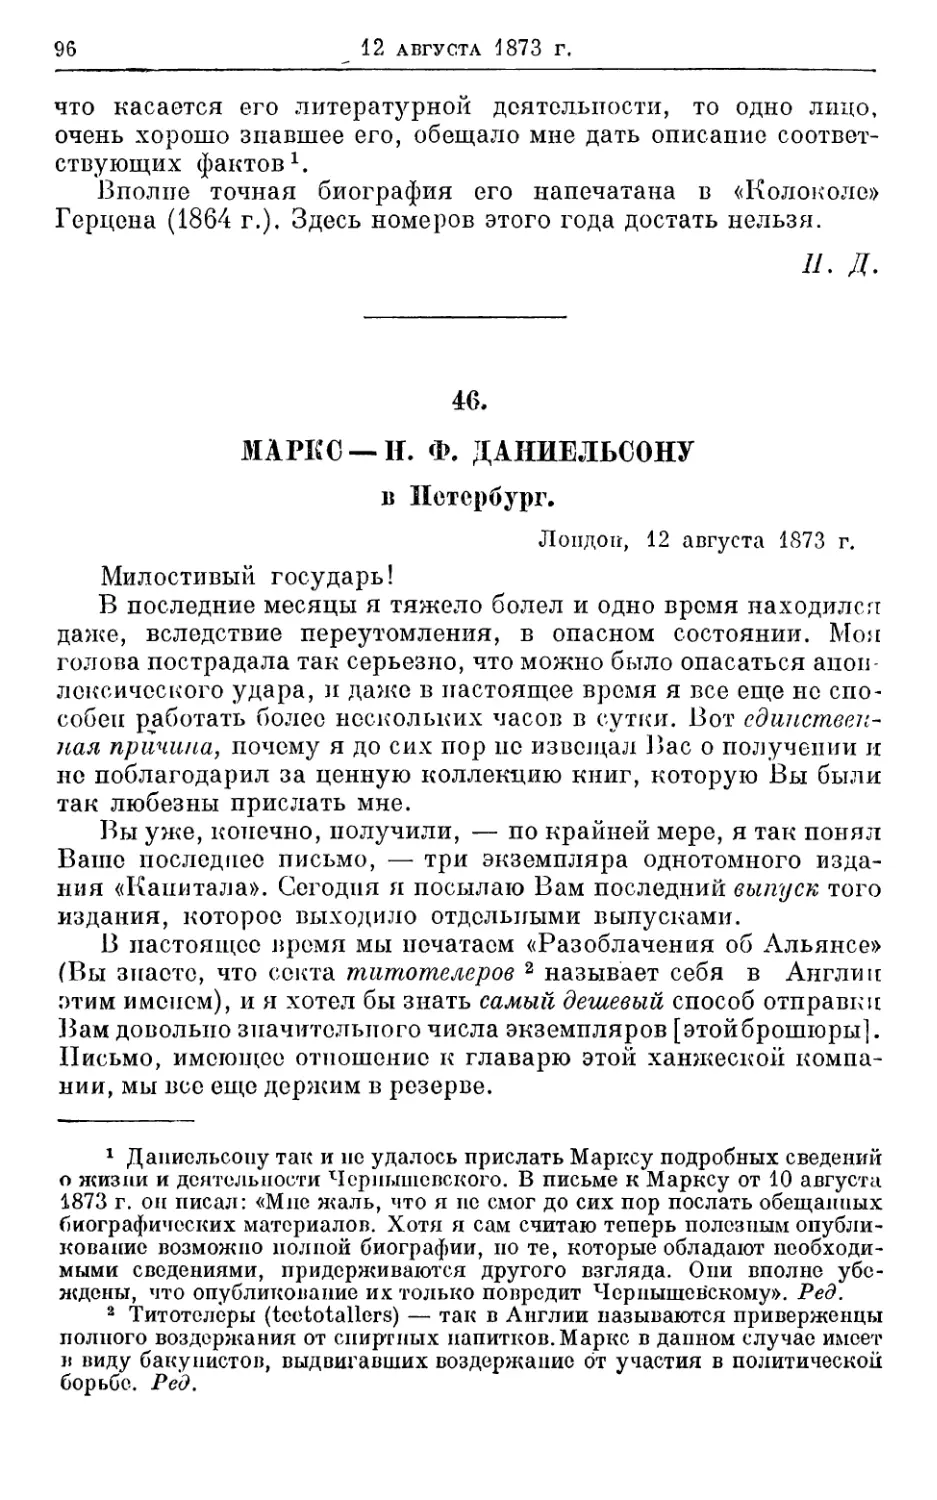 46. Маркс — Н. Ф. Даниельсону, 12 августа 1873г